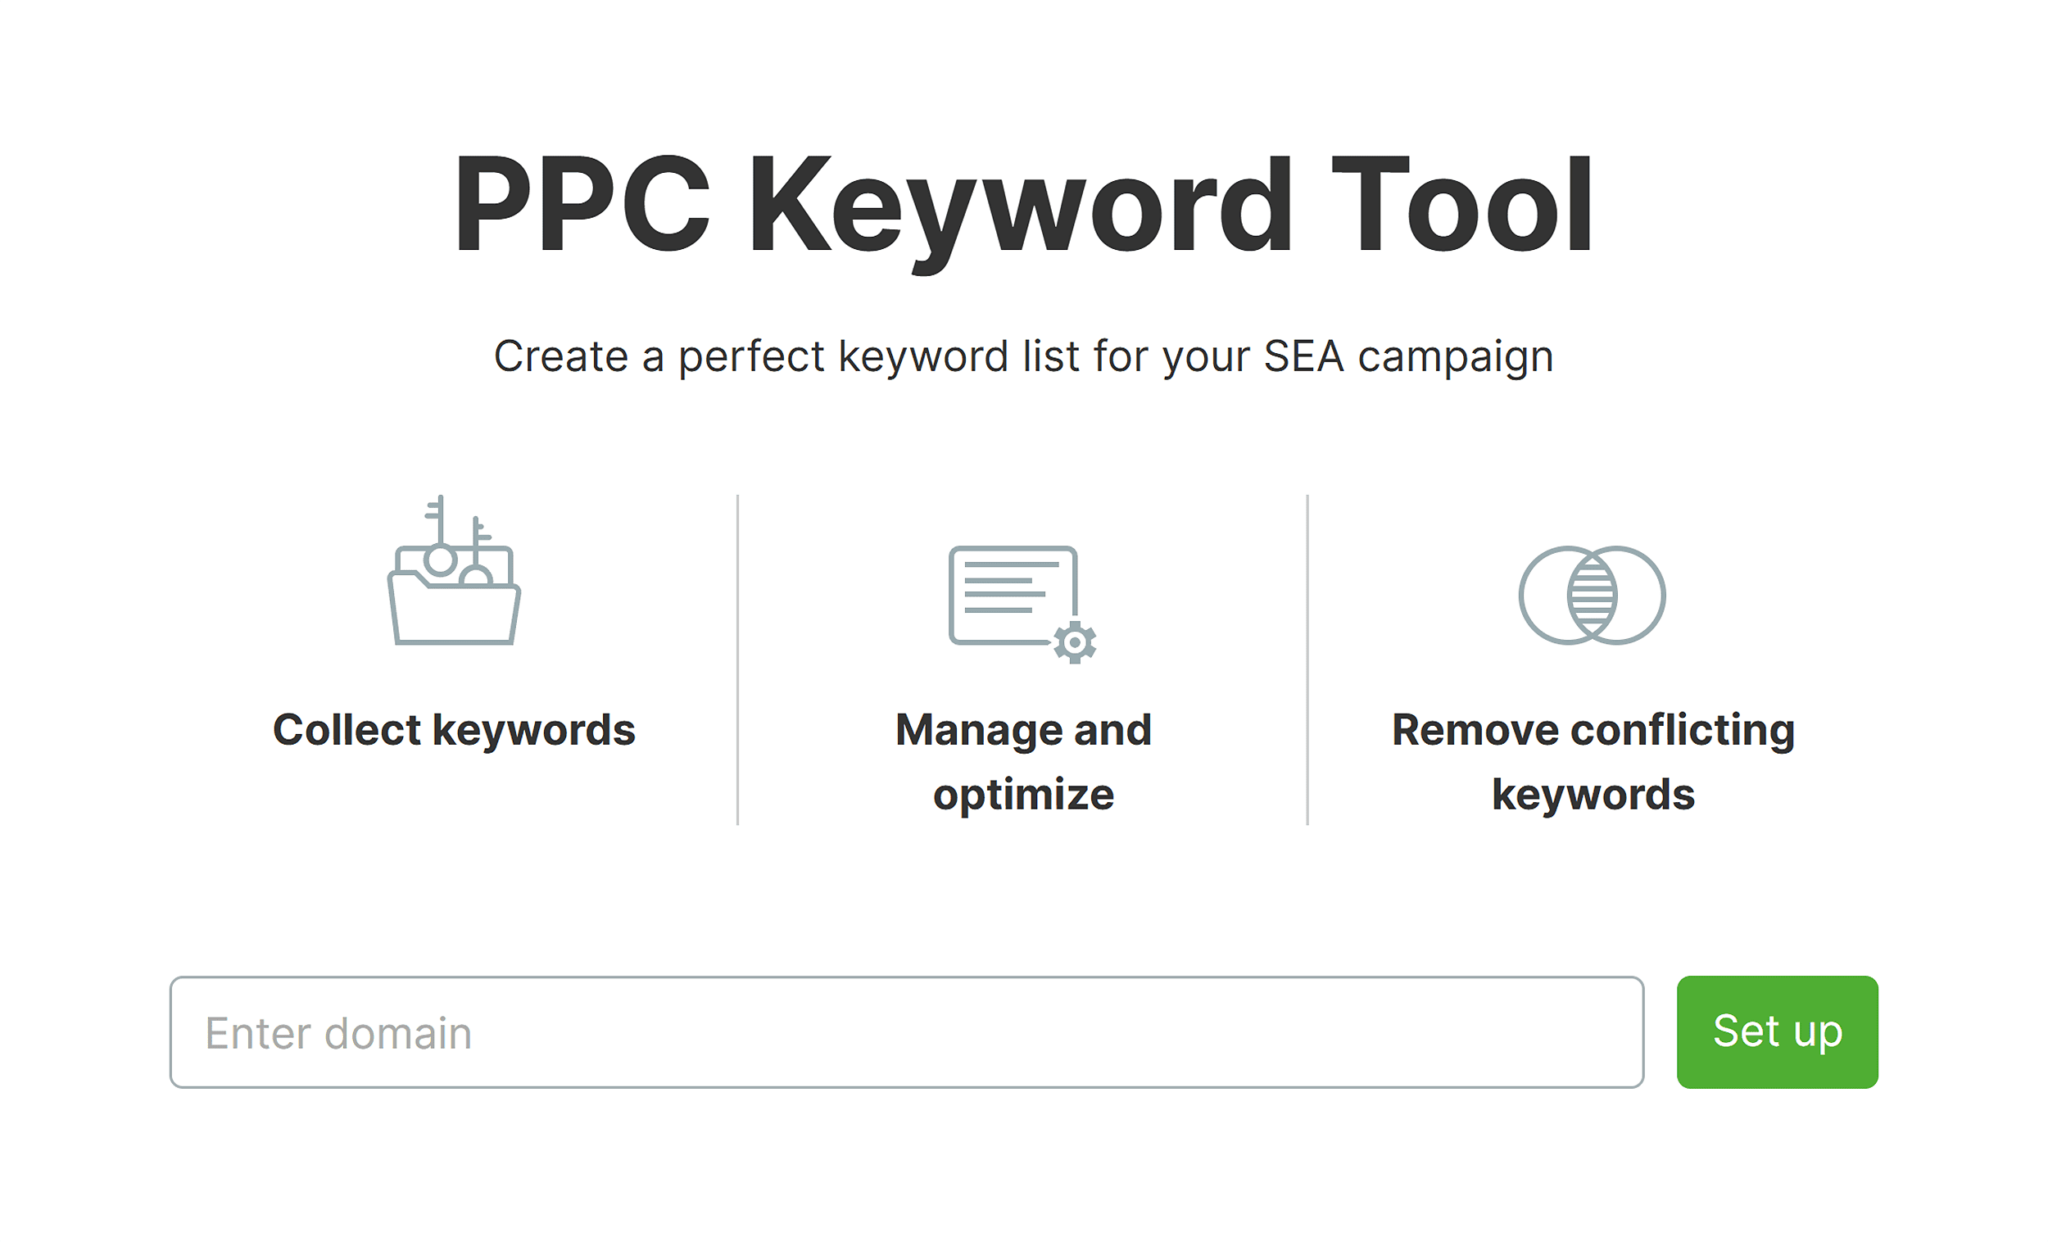 semrush-ppc-keyword-tool 29 Top Digital Marketing Tools for Every Budget